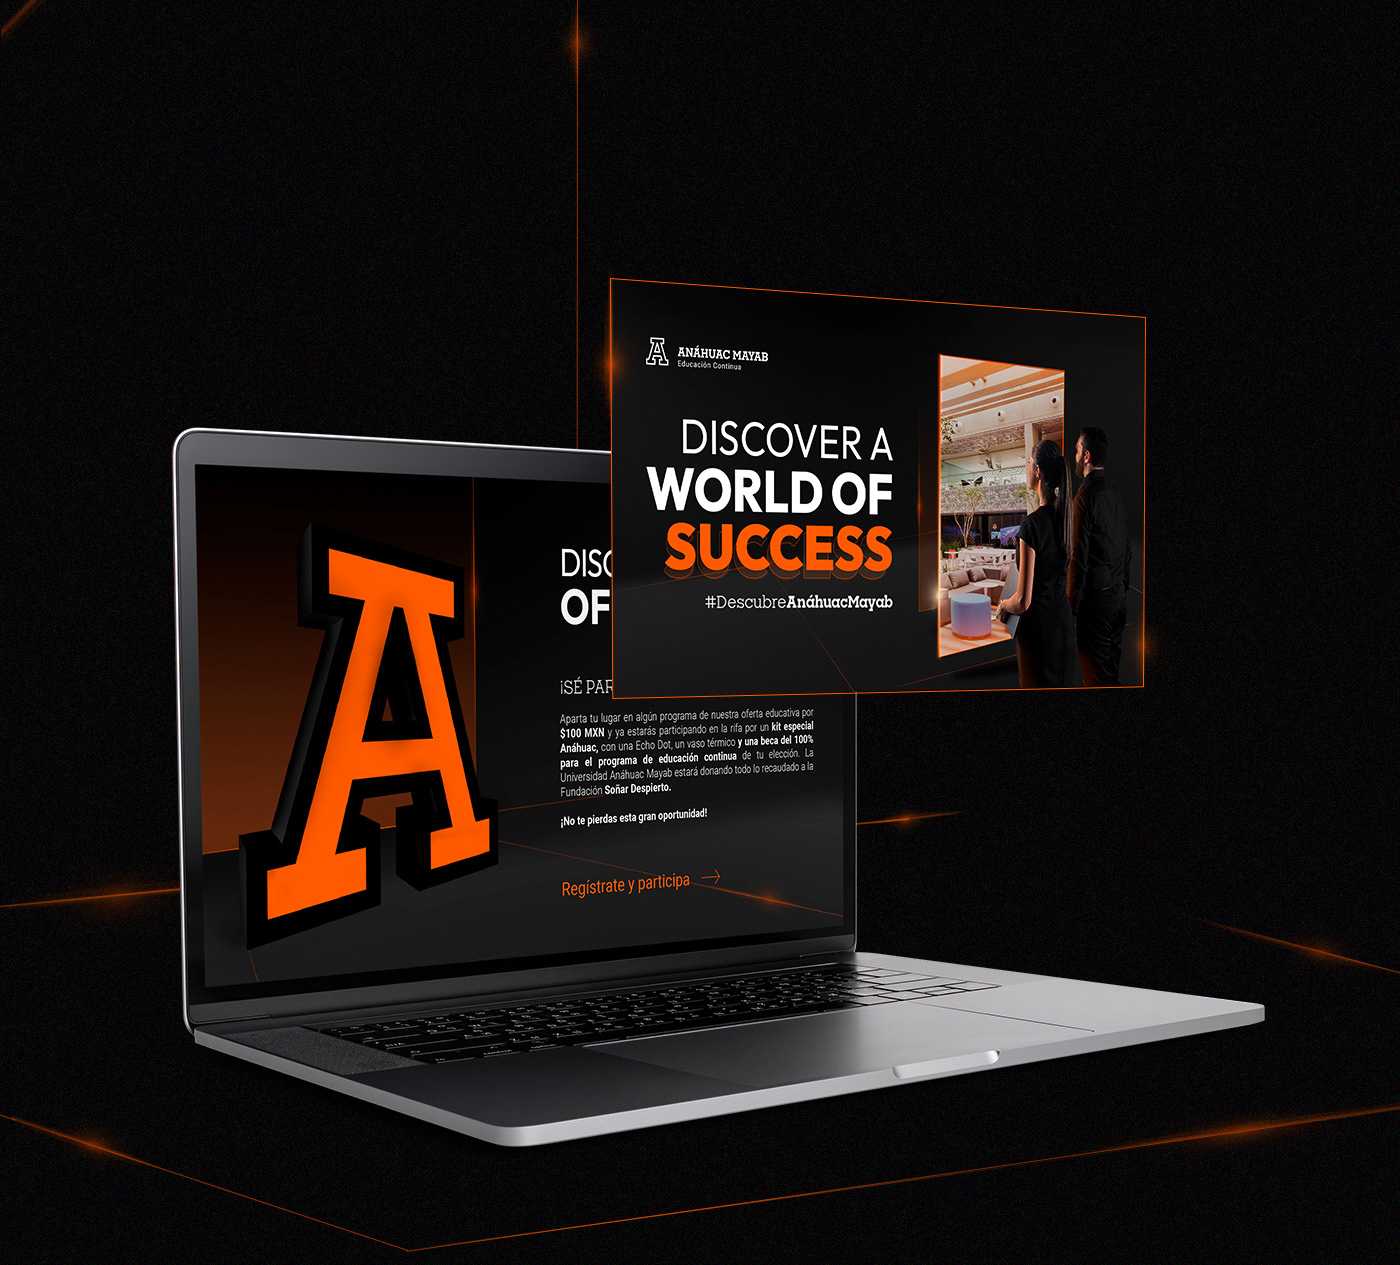 Advertising Campaign Education anahuac success portal innovation Educación Continua postgraduate